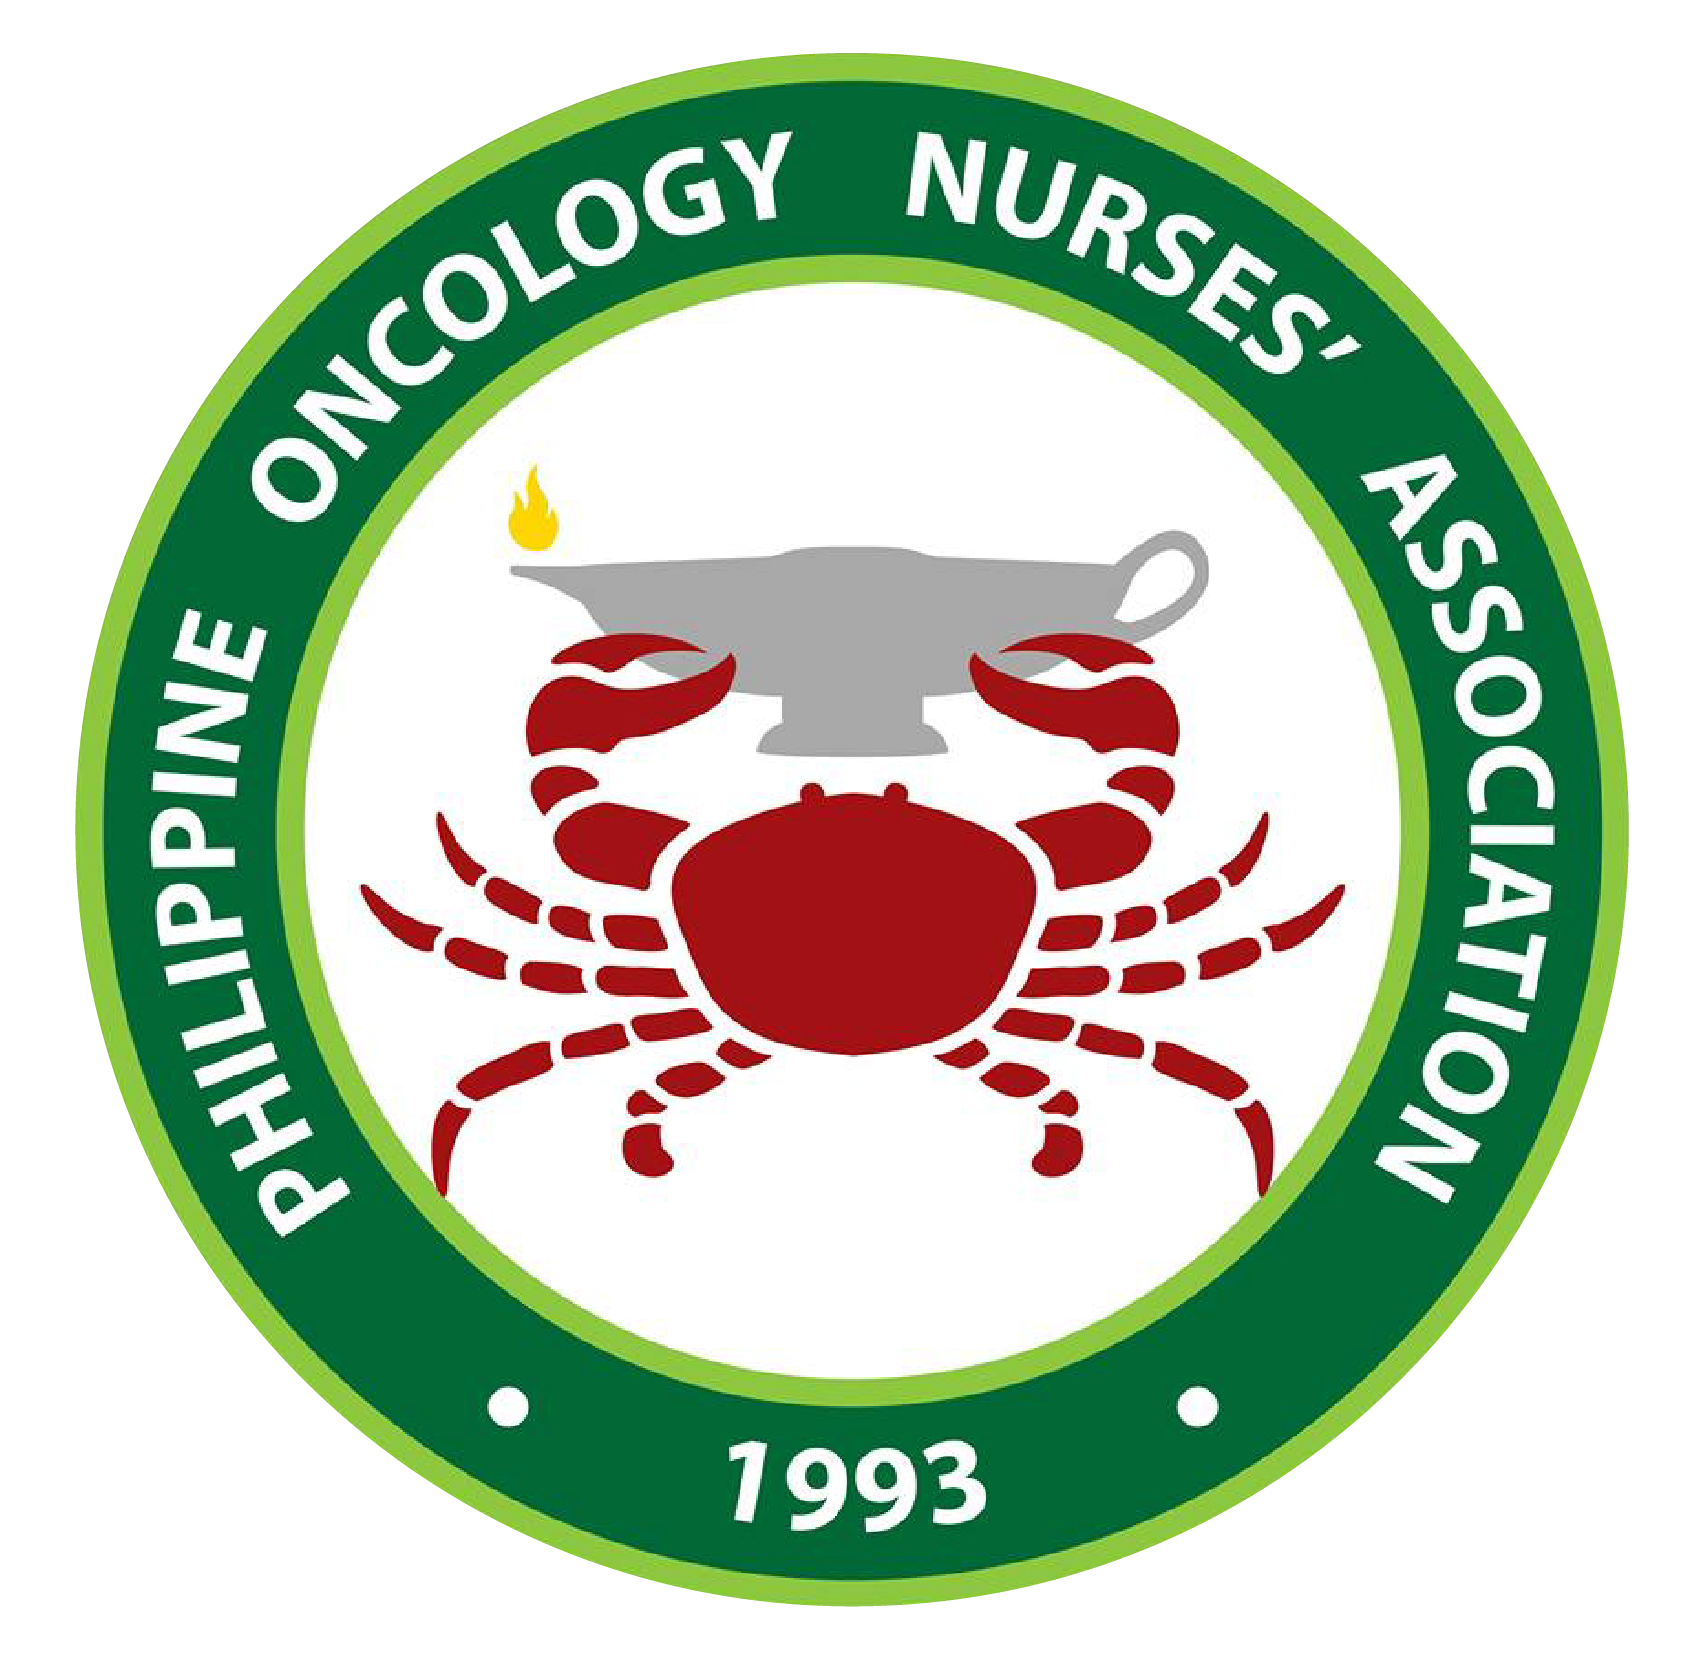 Philippine Oncology Nurses Association, Inc.